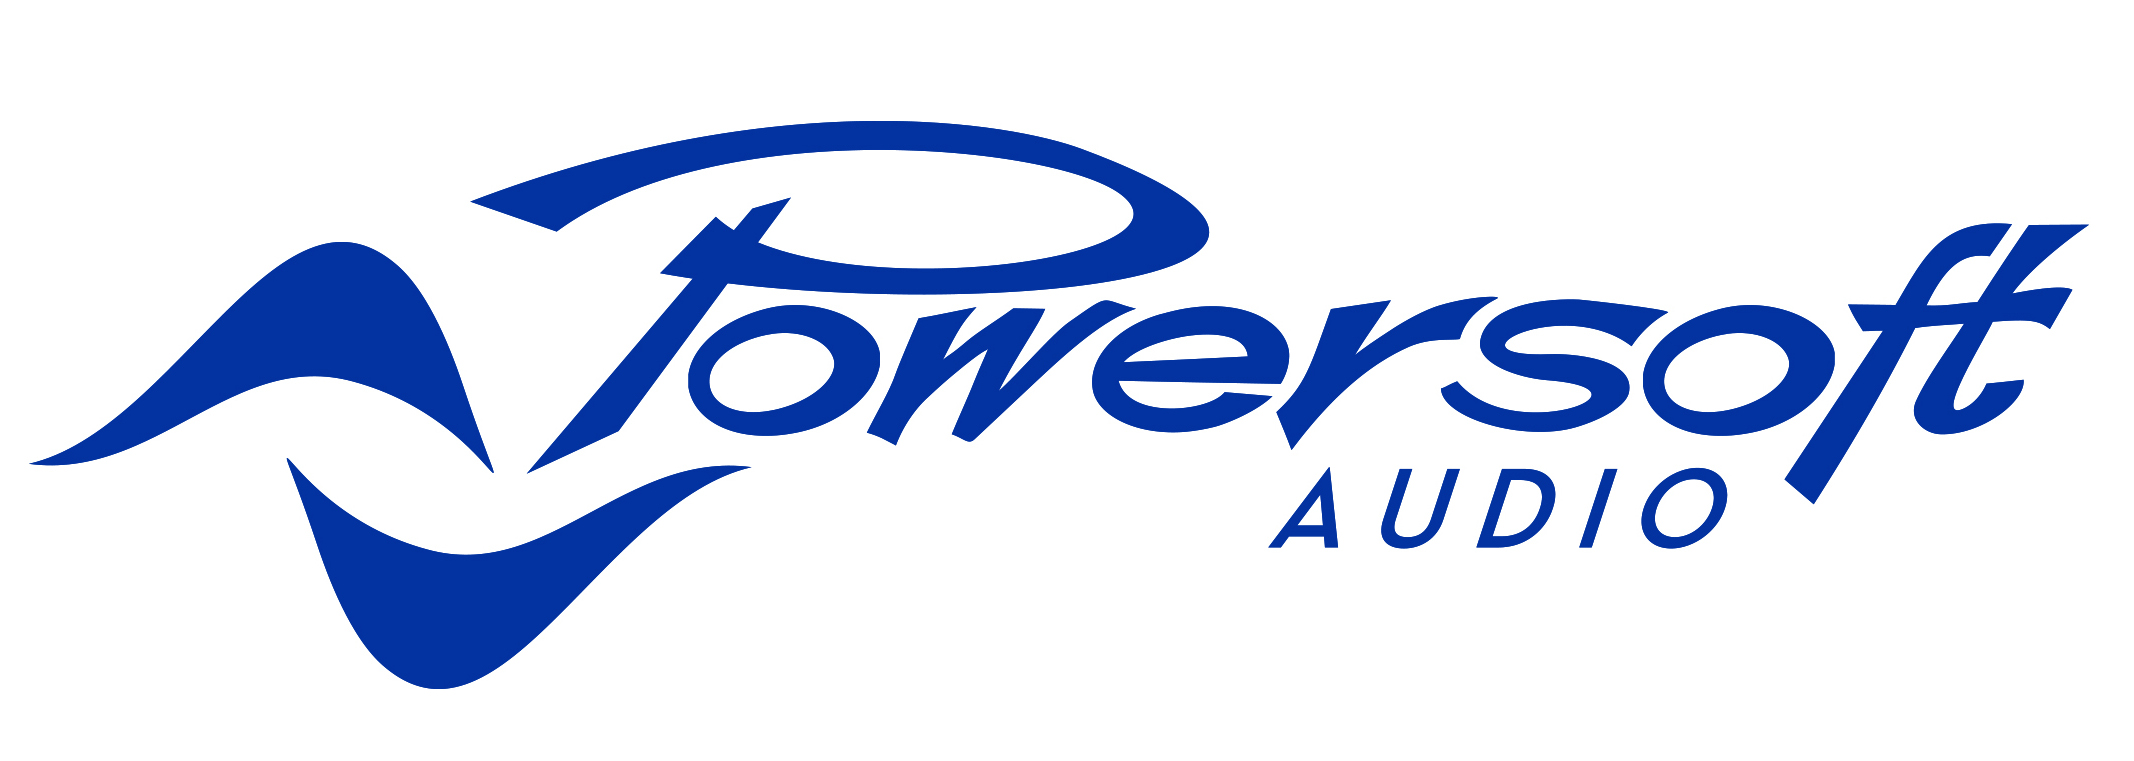 Powersoft Audio Logo